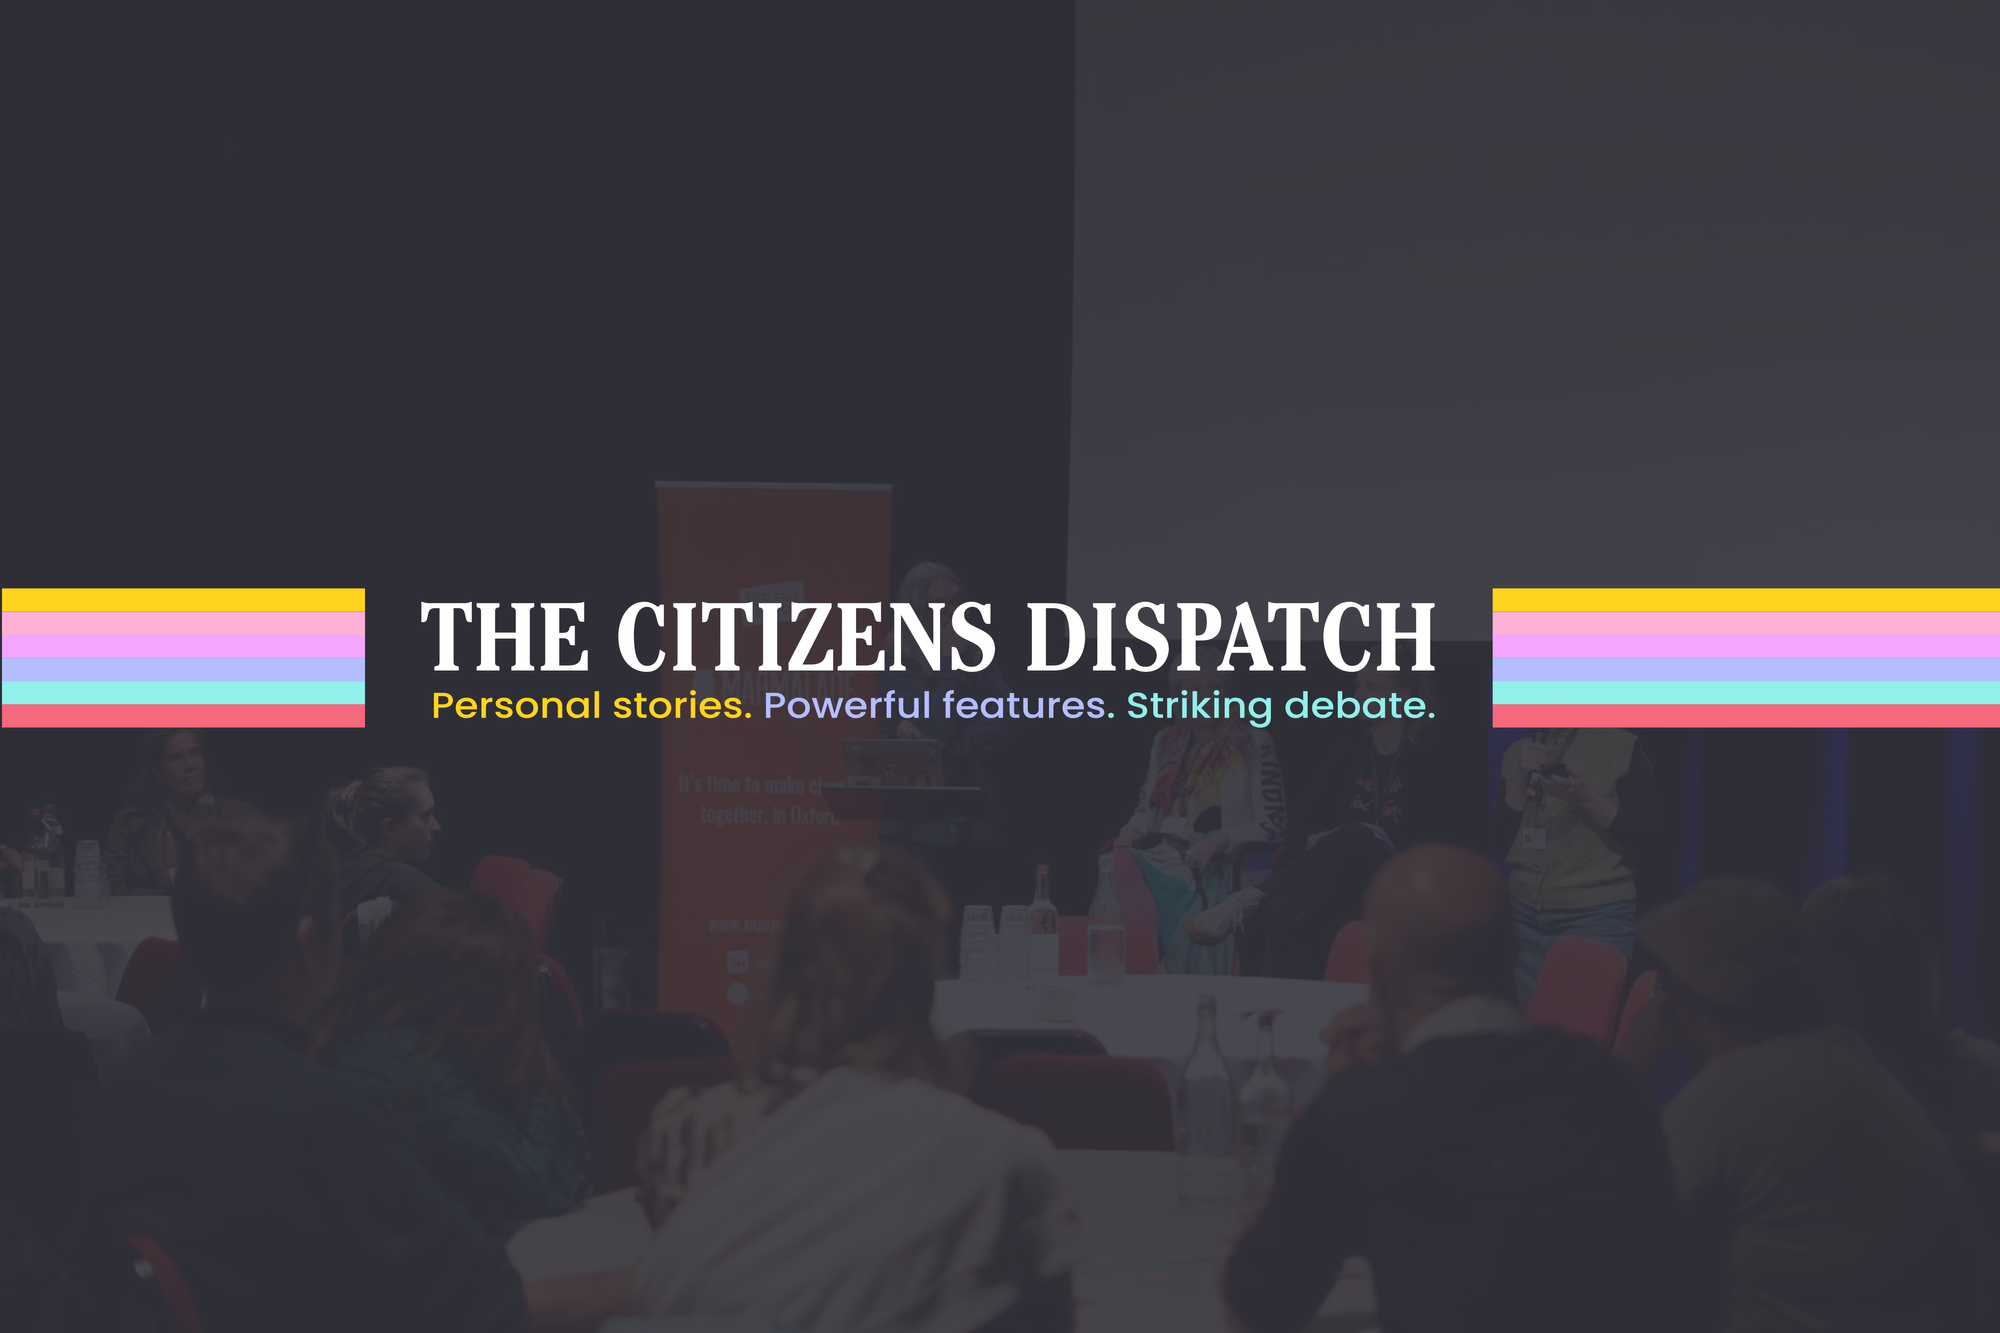 The Citizens Dispatch